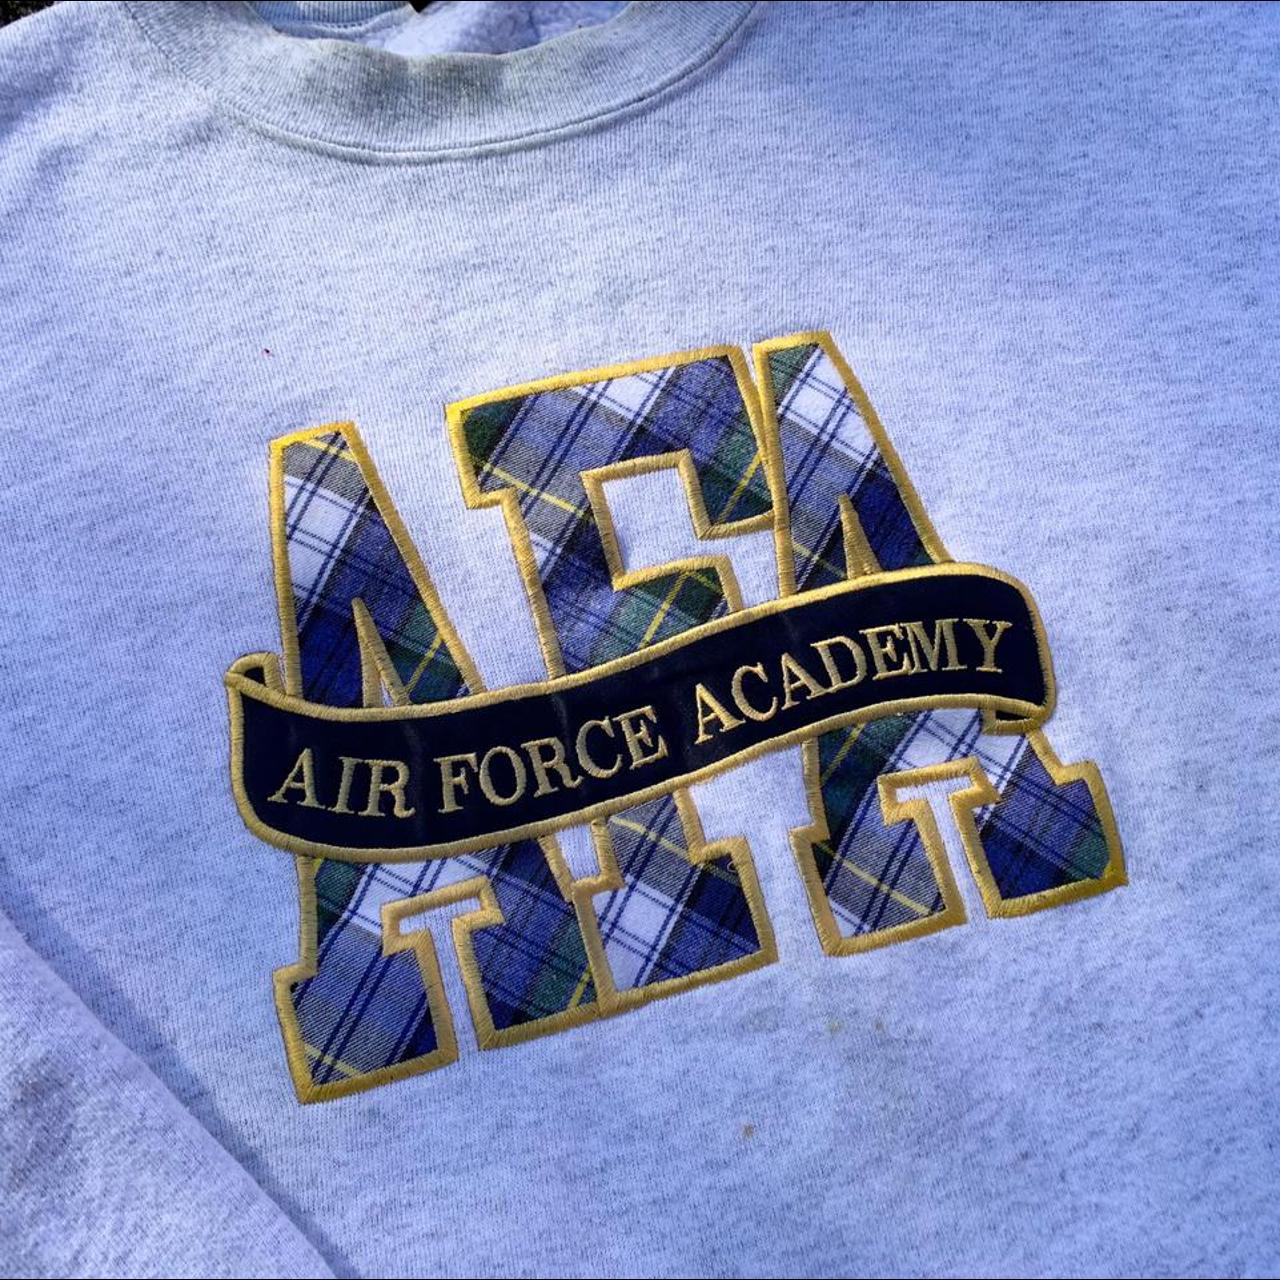 Product Image 2 - Vintage Air Force College Sweatshirt

90s